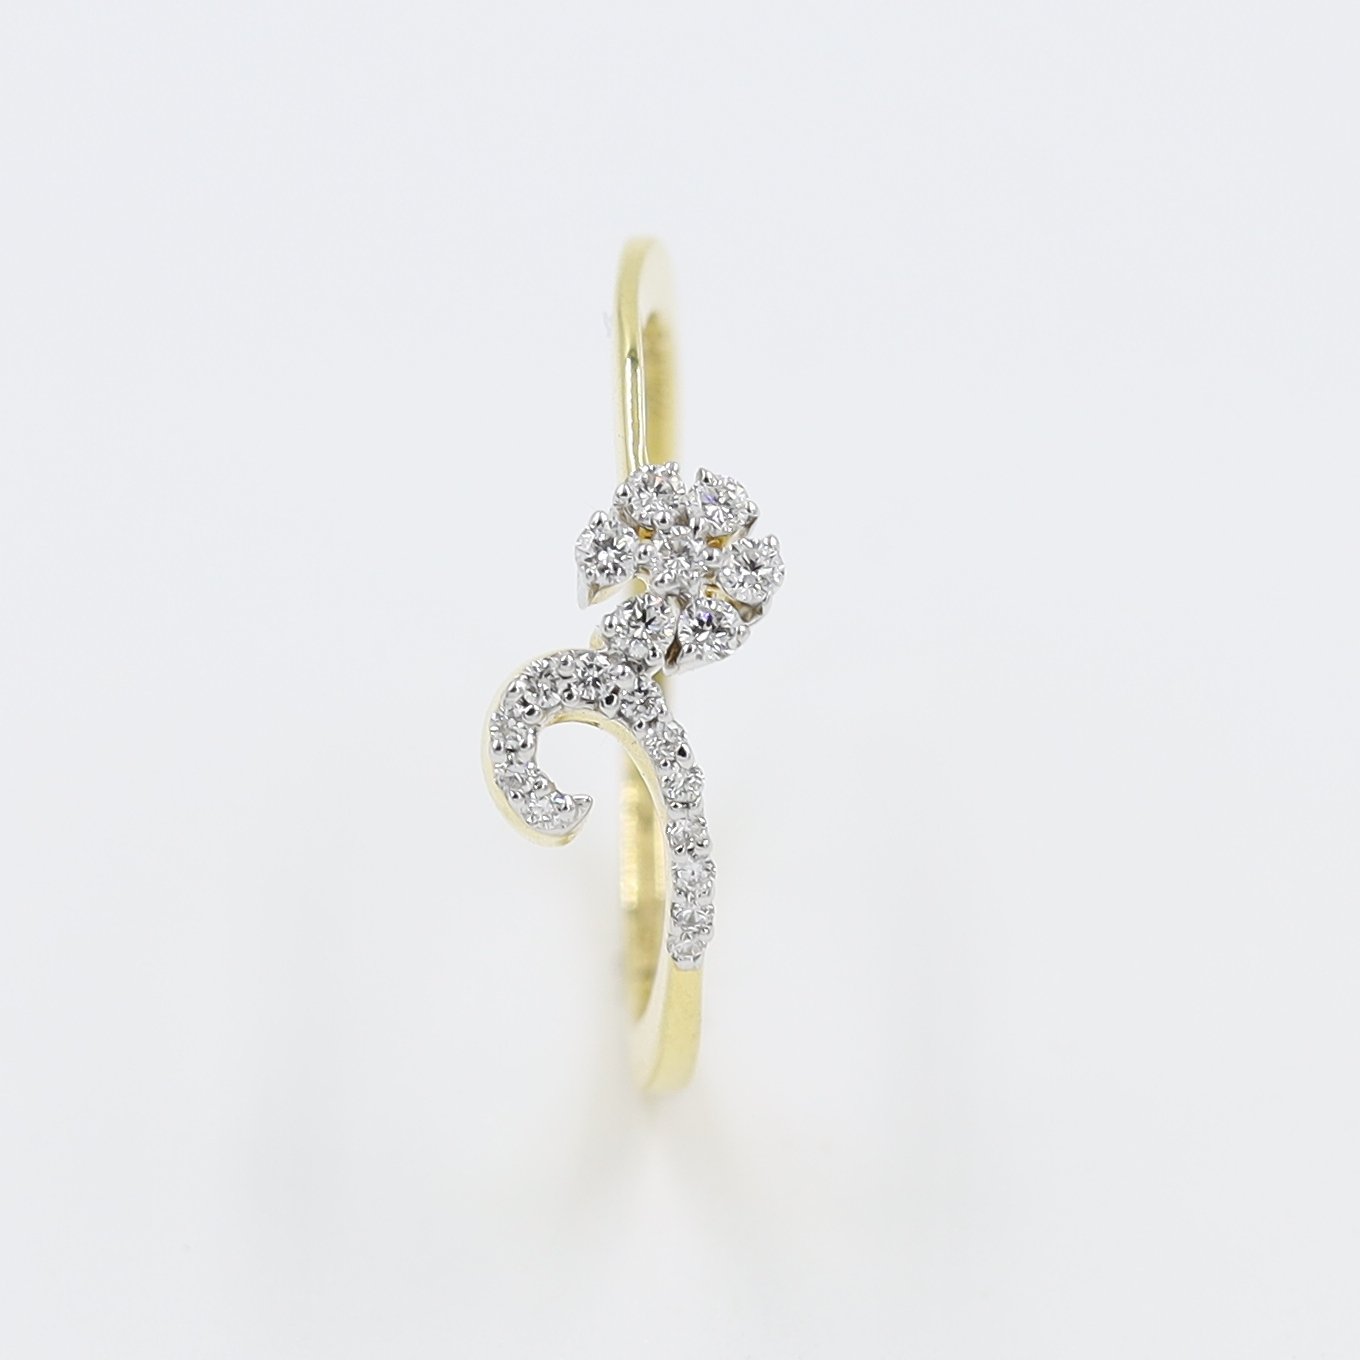 Floral Dazzling 14 Karat Gold And Diamond Finger Ring